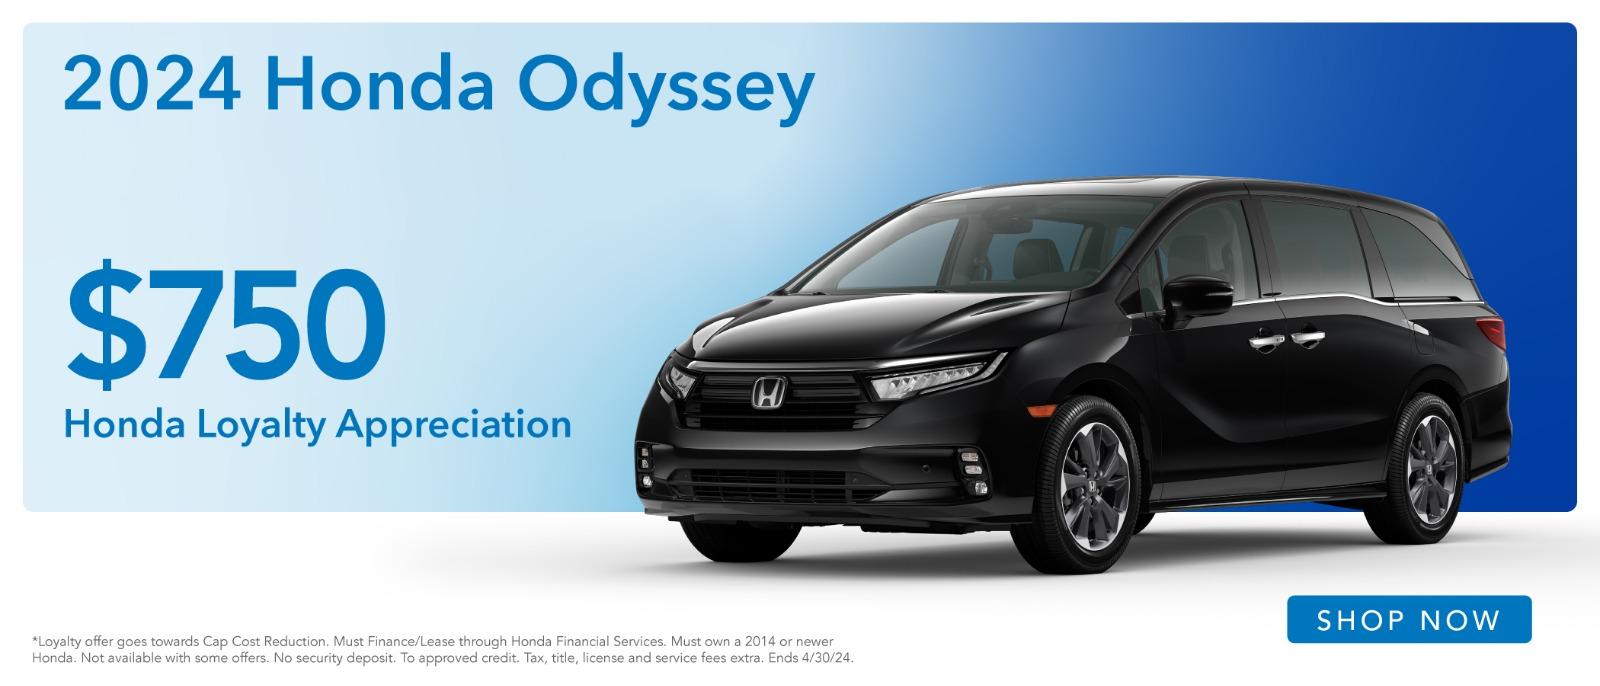 2023 Honda Odyssey $750 Honda Loyalty Appreciation